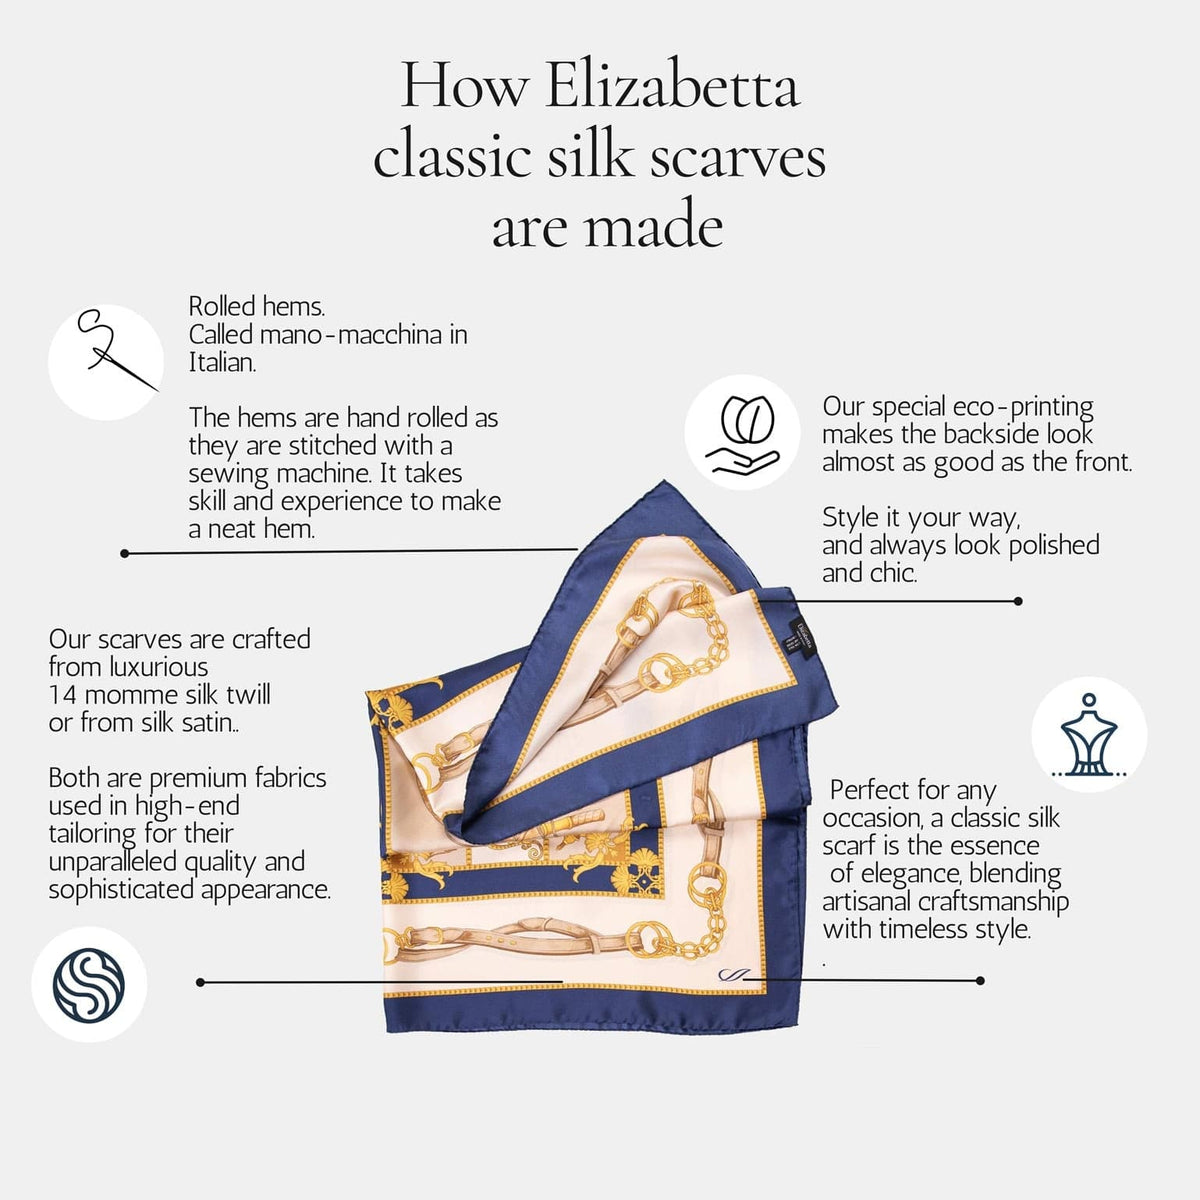 How an Elizabetta classic silk scarf is made